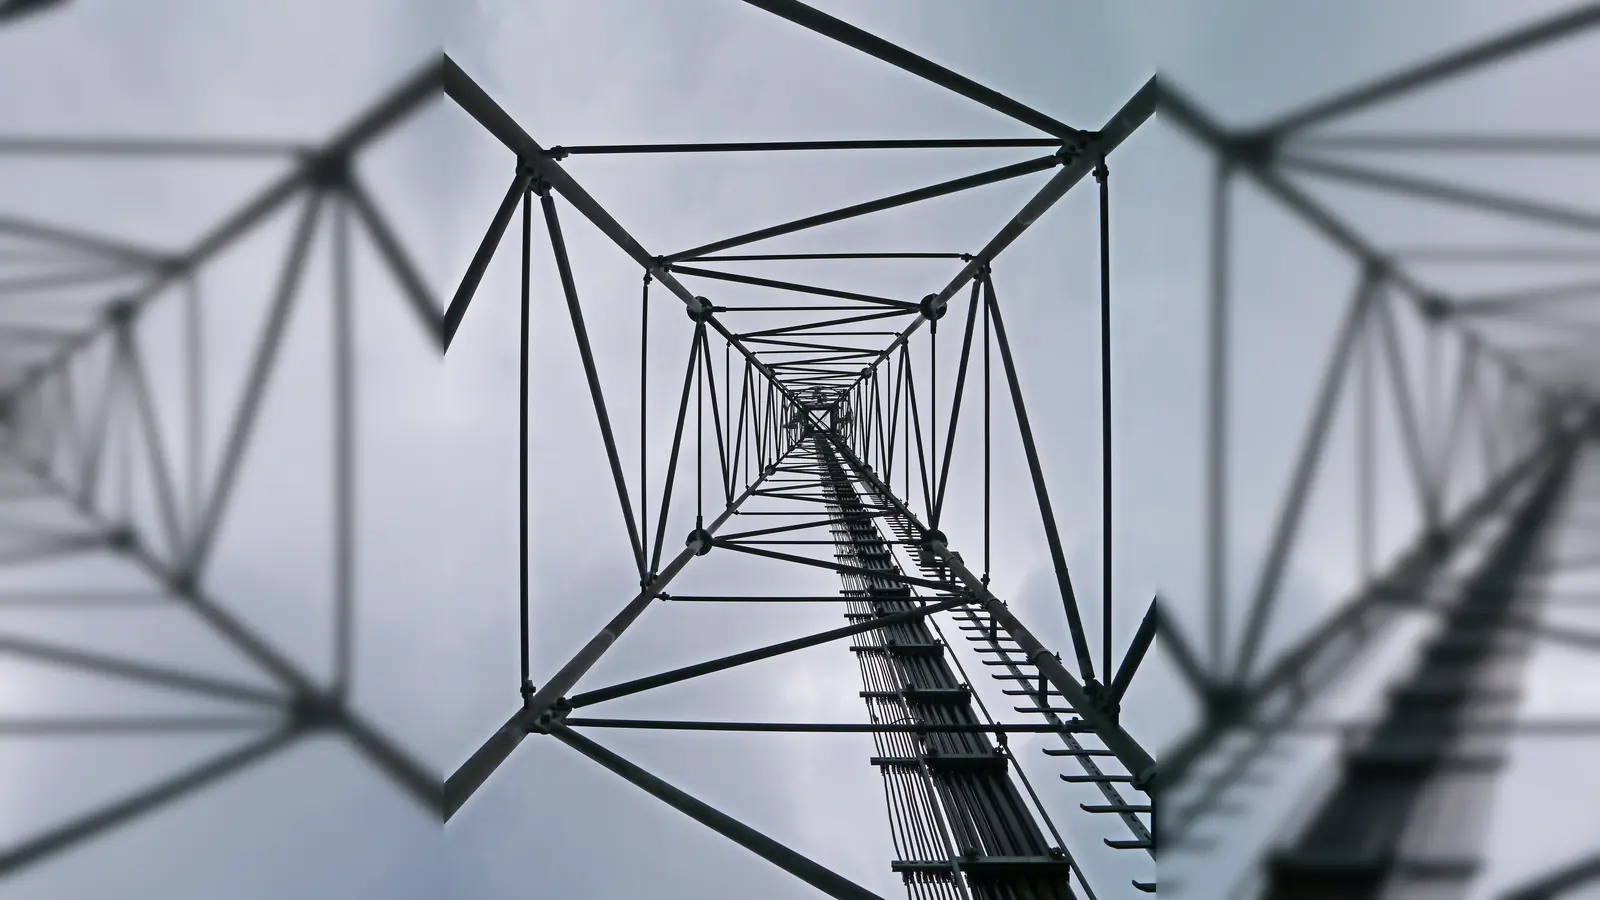 <b>Den Mast</b> baut die Gemeinde, Anbieter können dann Antennen anbringen.  (Foto: hpgruesen/Pixabay)